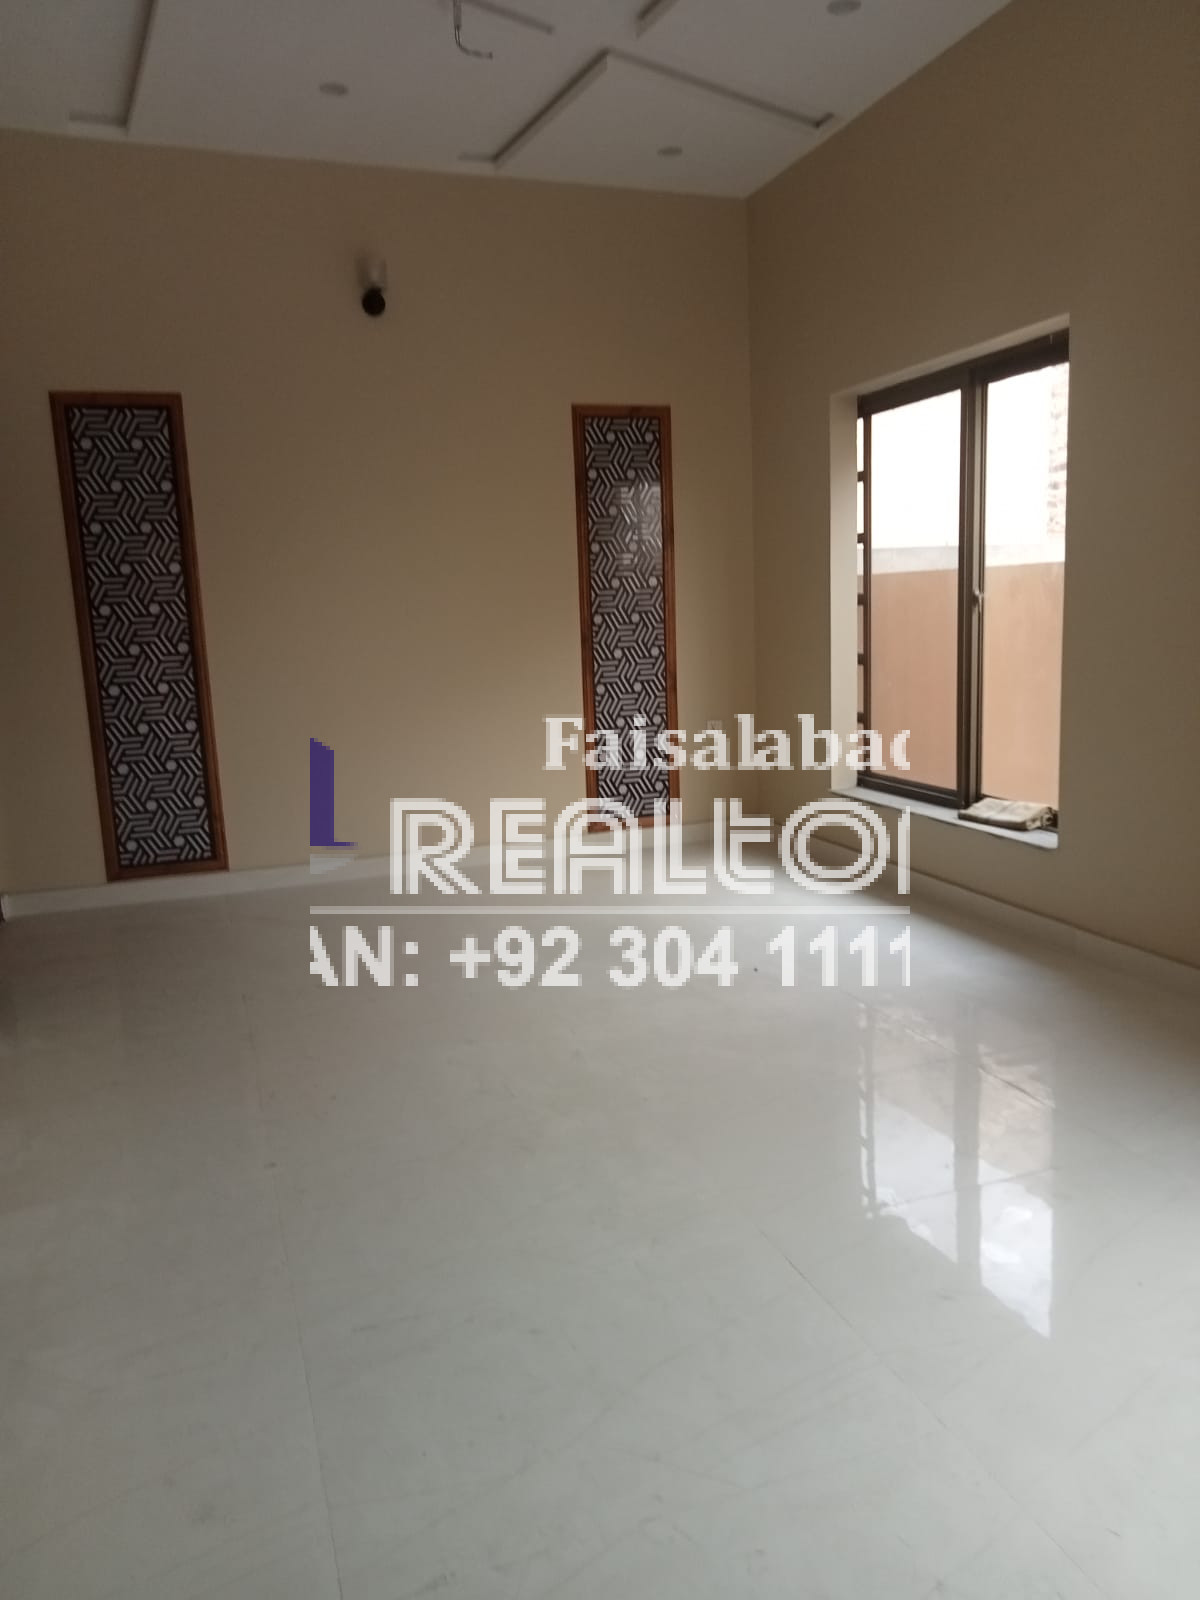 7 Marla House For Rent in Faisalabad - Faisalabad Realtors